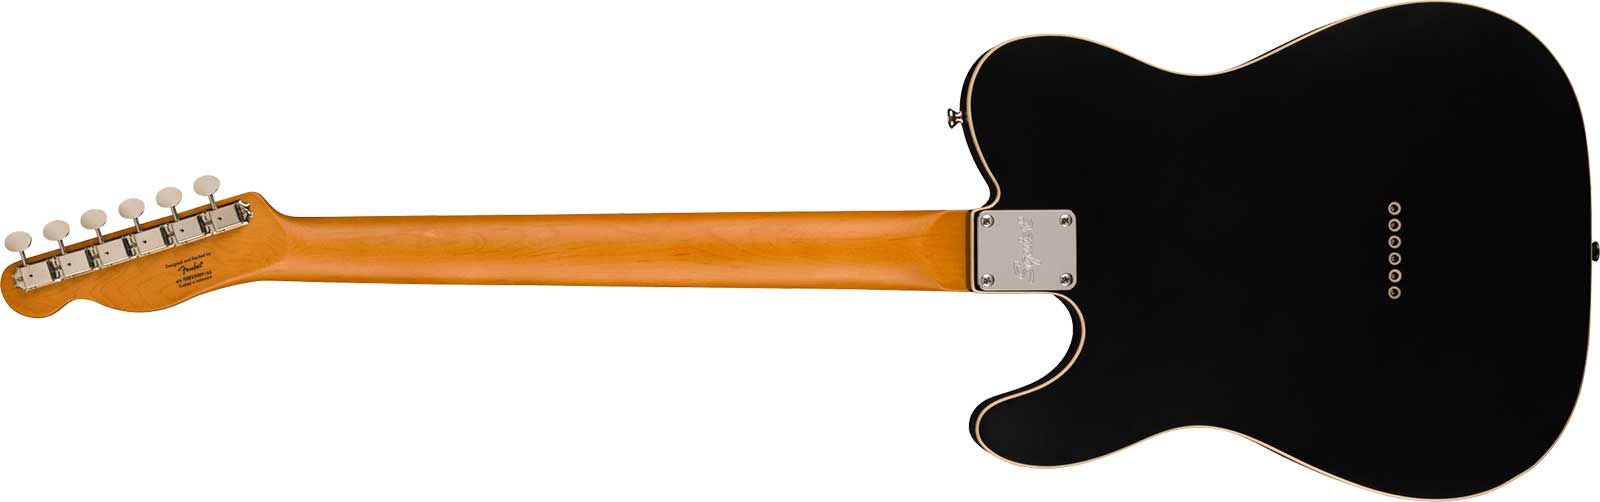 Squier Tele Baritone Custom Classic Vibe Fsr 2s Ht Lau - Satin Black - Bariton elektrische gitaar - Variation 1